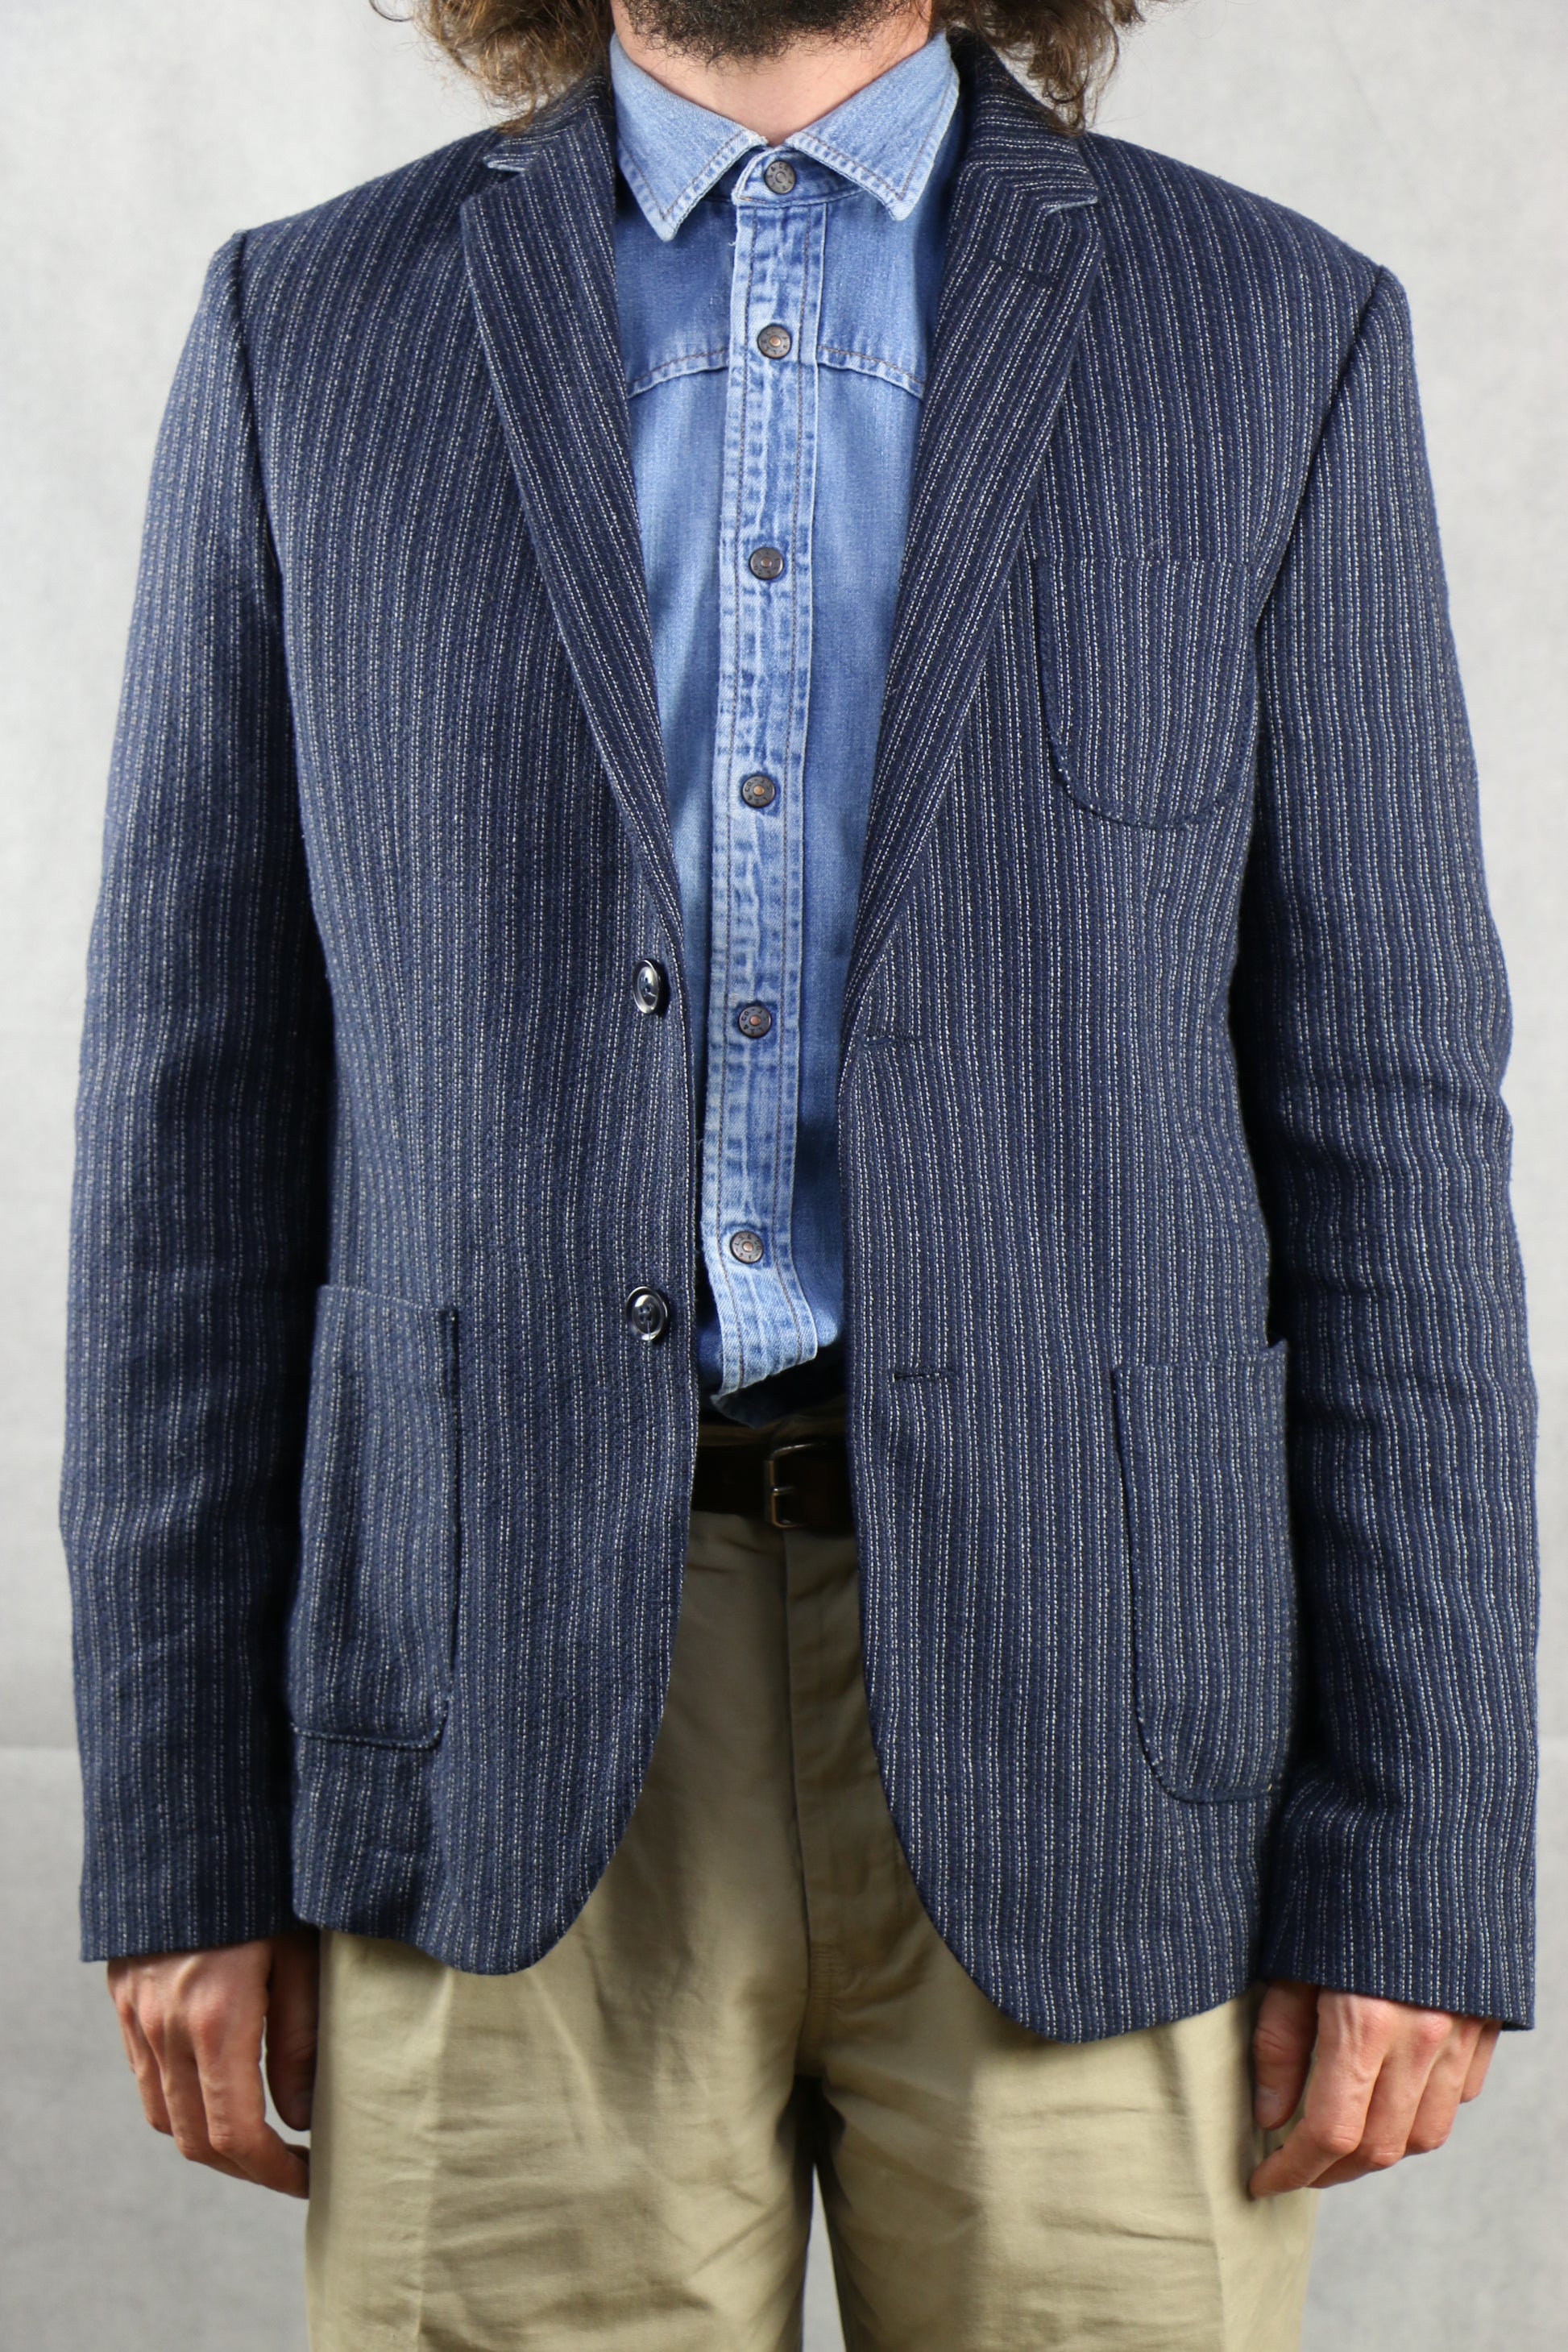 Altatensione Suit Jacket - vintage clothing clochard92.com